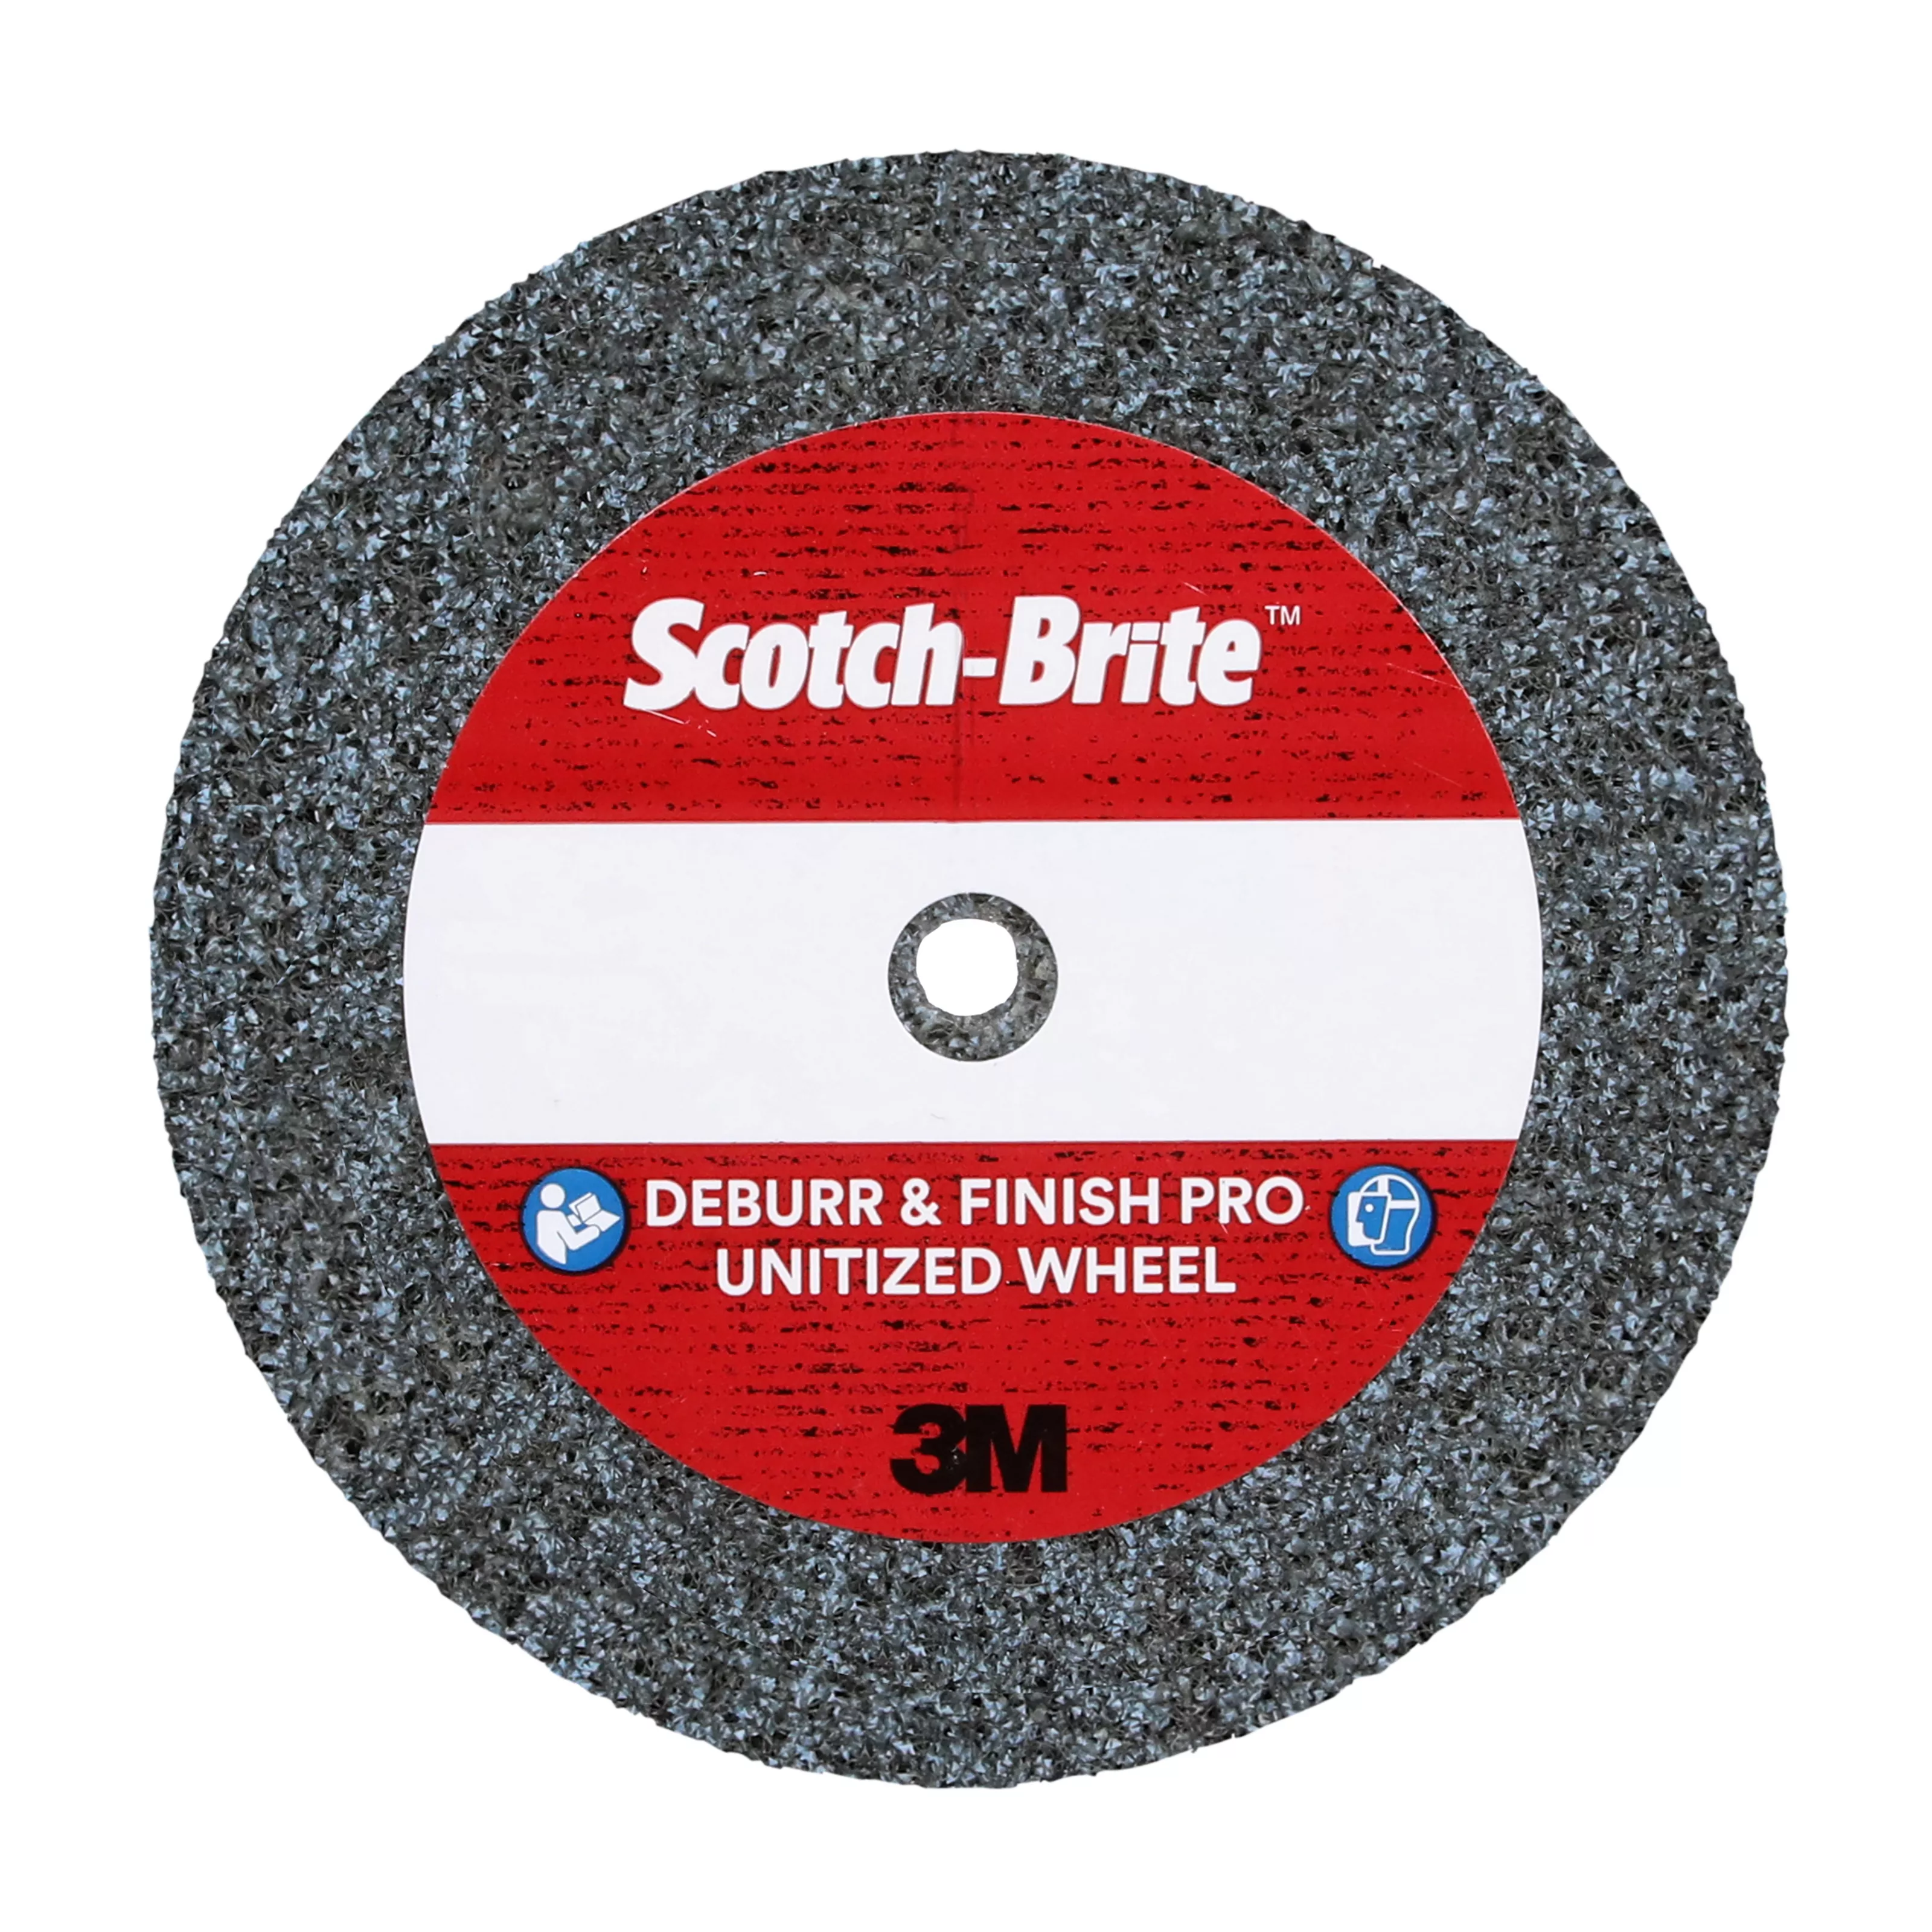 SKU 7100110916 | Scotch-Brite™ Deburr & Finish Pro Unitized Wheel